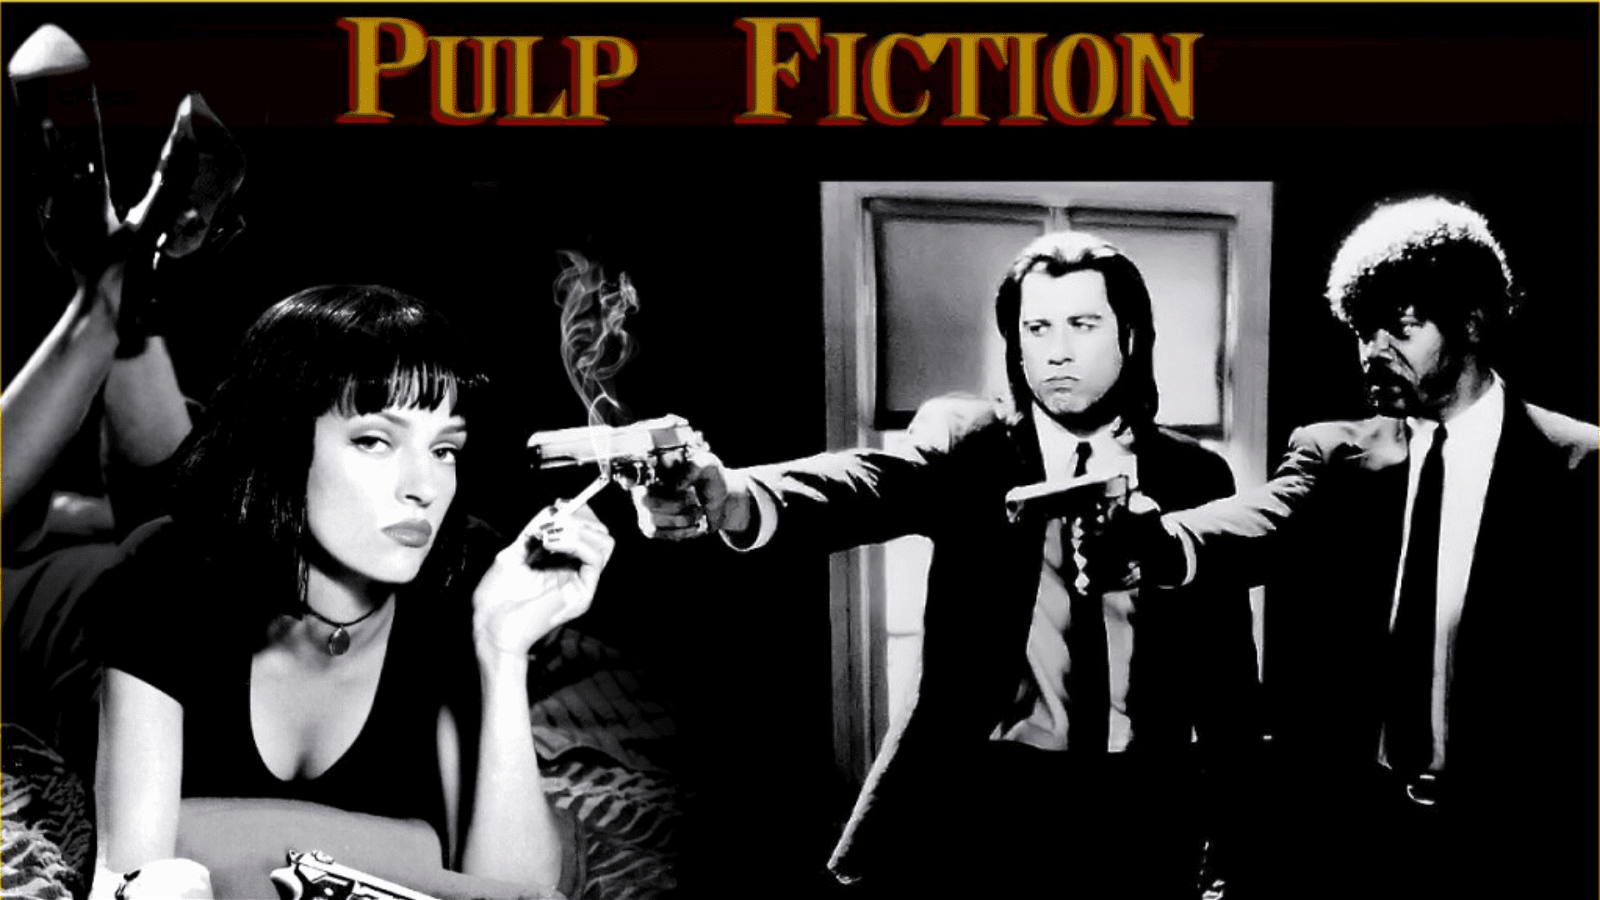 Pulp Fiction Costume Ideas